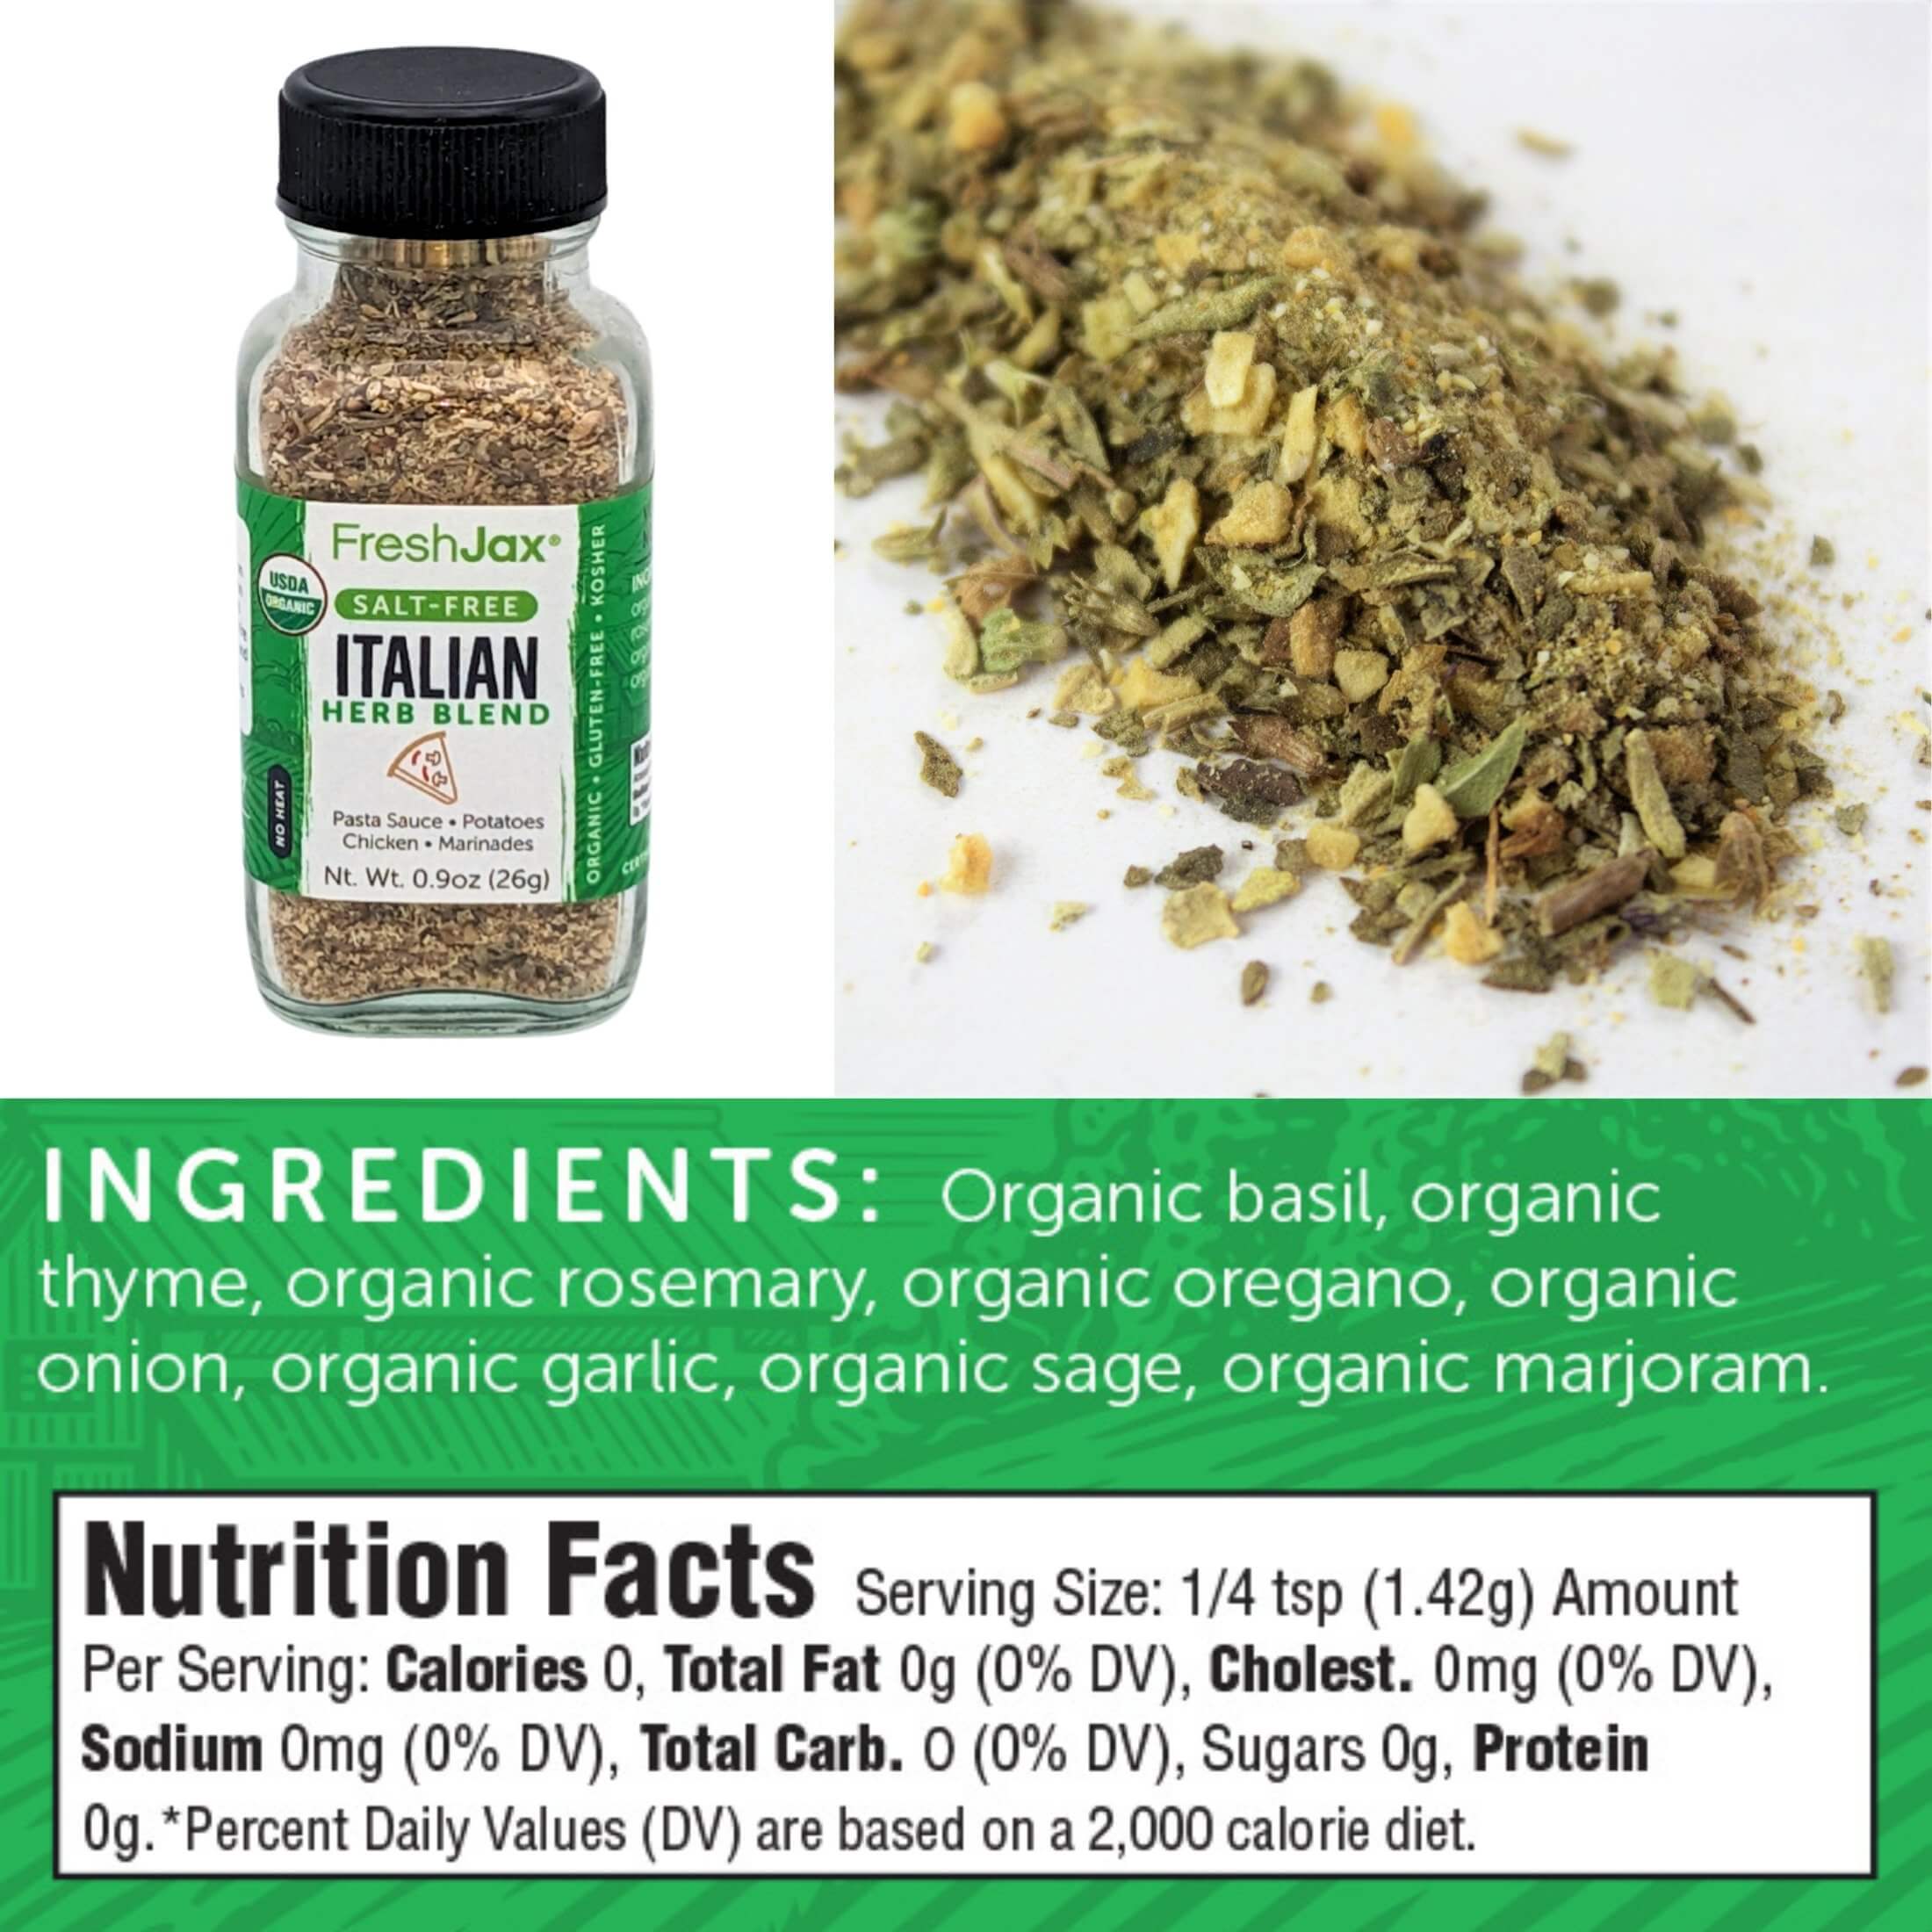 FreshJax Organic Spices Salt-Free Italian Herb Blend Ingredients and Nutritional Information